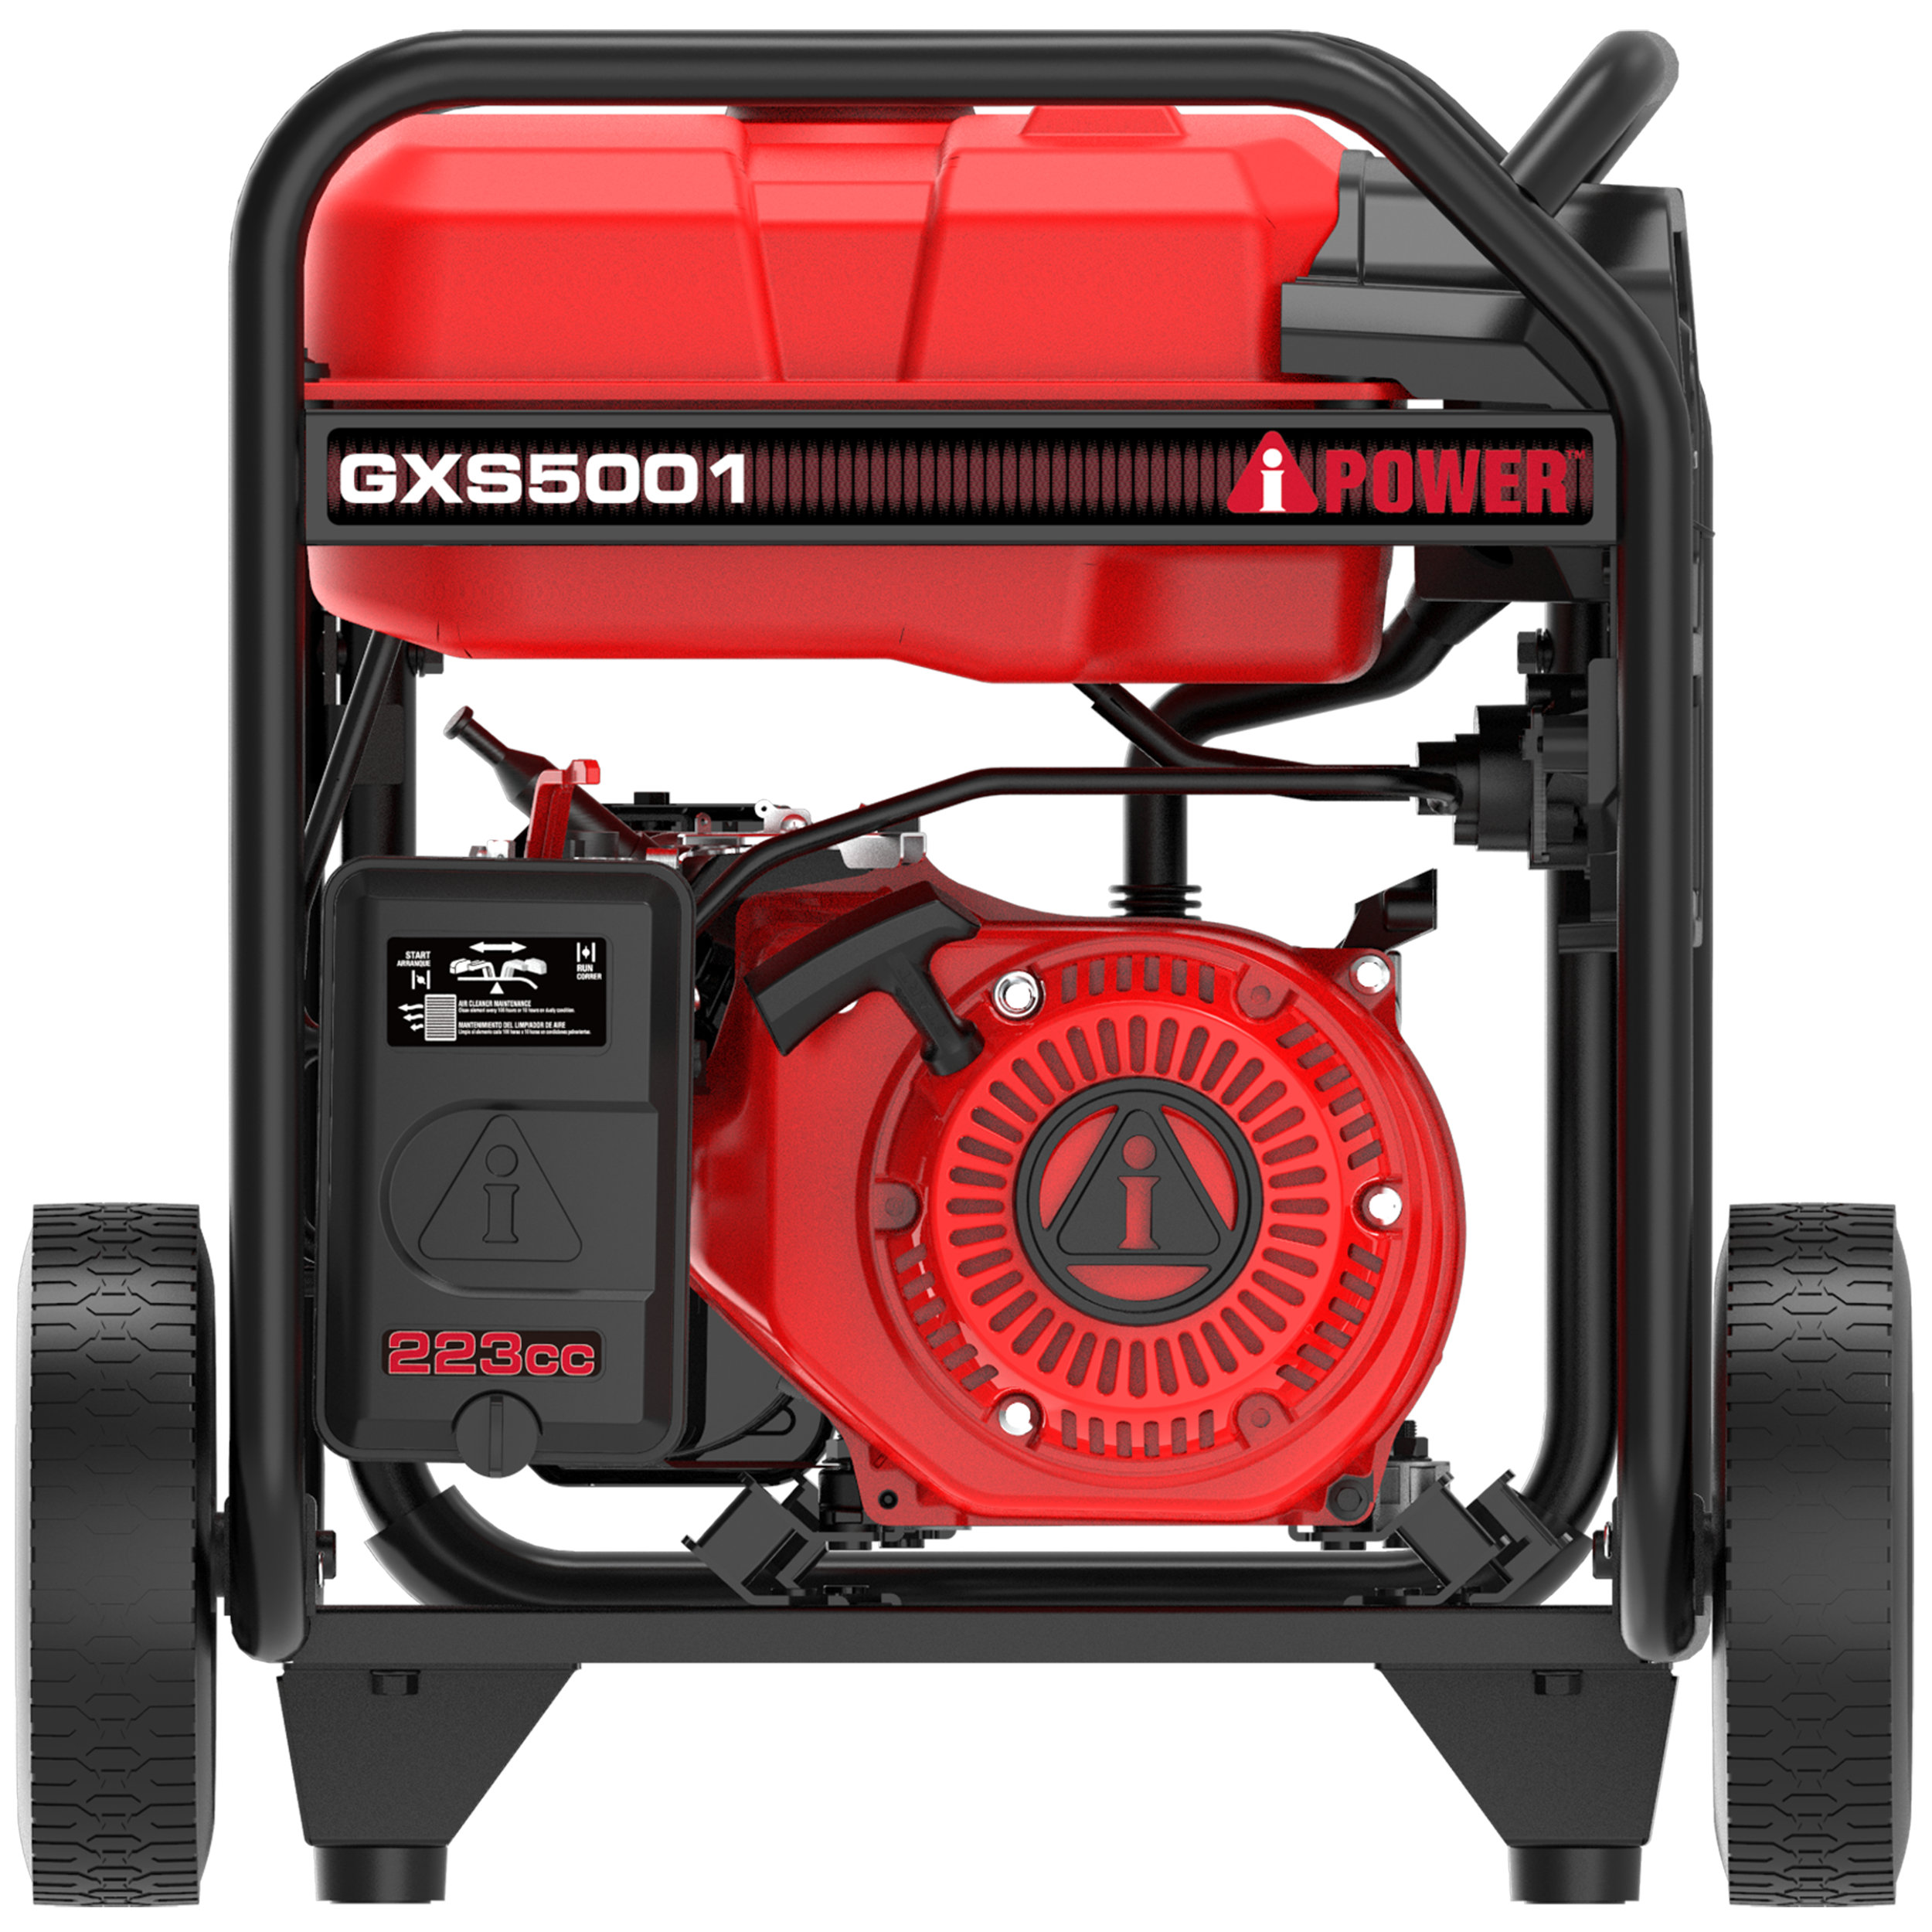 GXS5001 Portable Generator